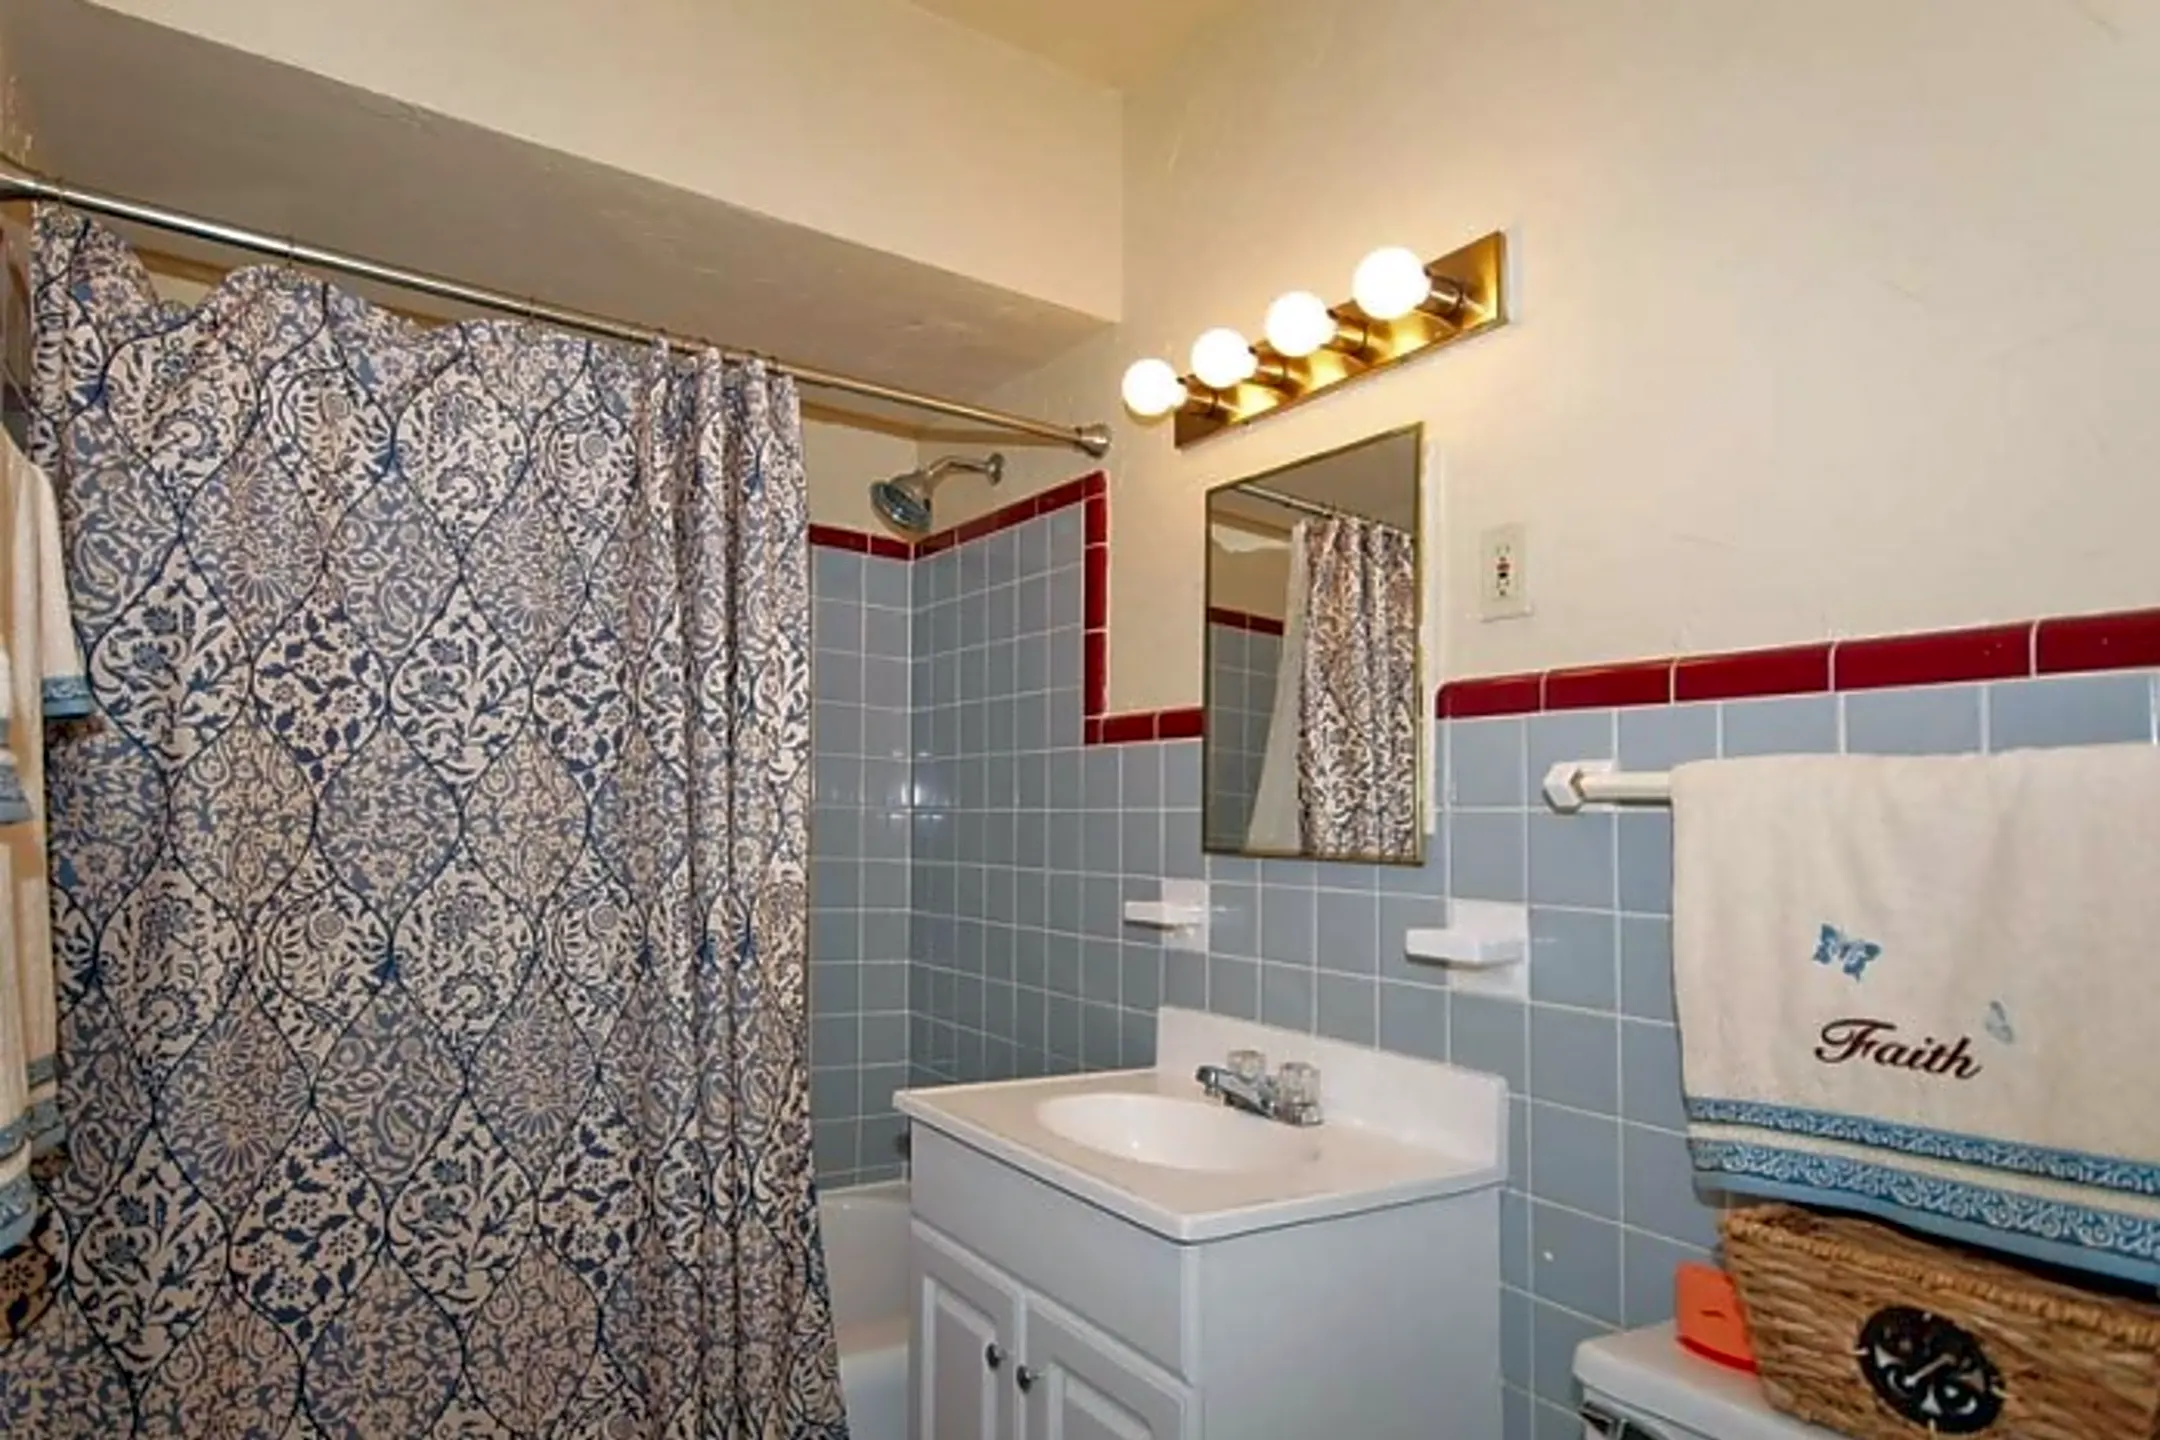 Bathroom - The Westmoreland - Shaker Heights, OH